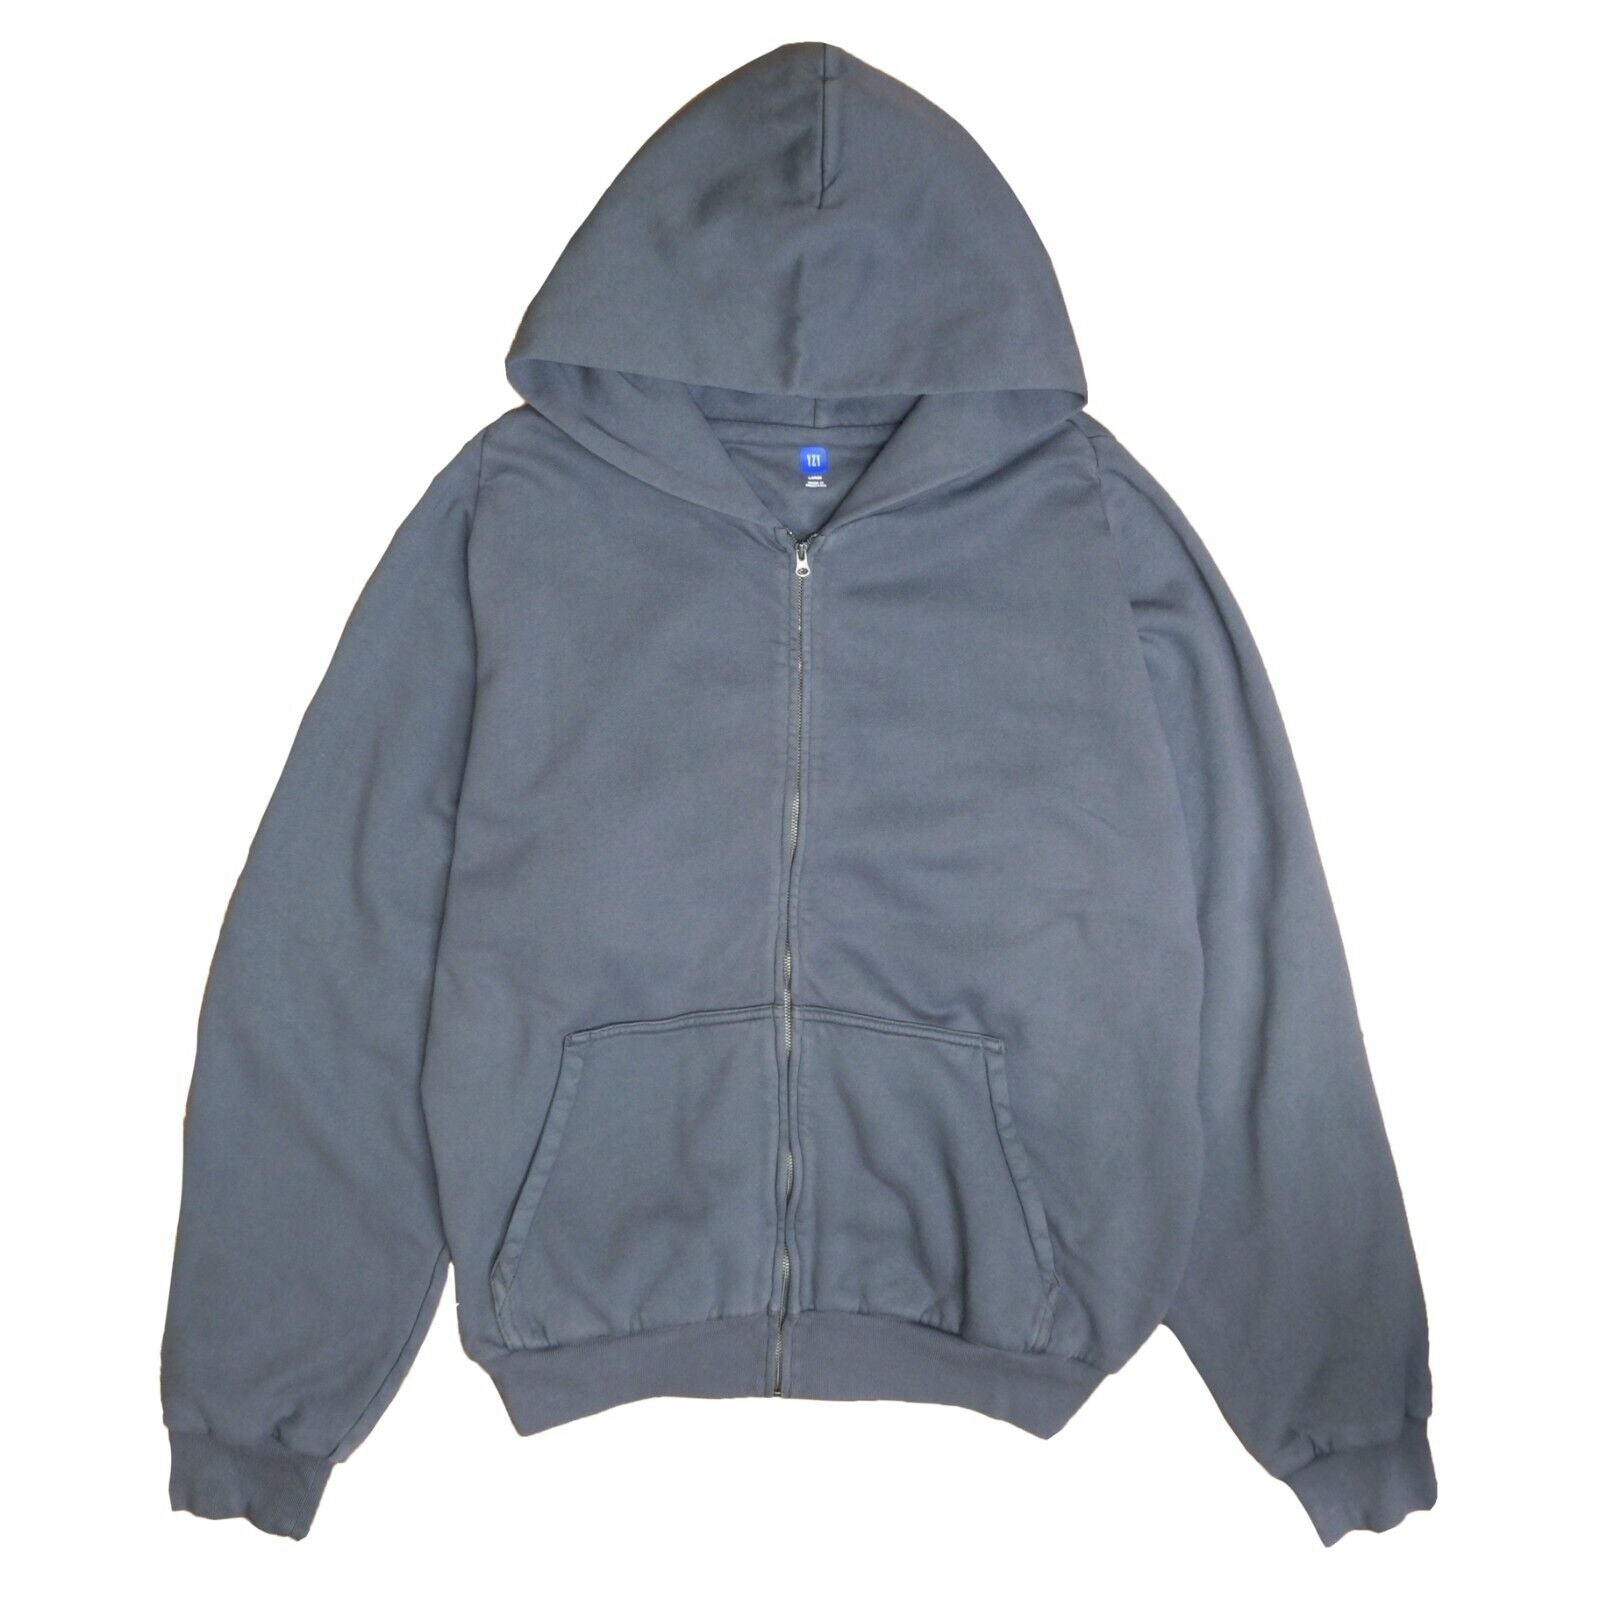 Yeezy Gap Unreleased Zip Sweatshirt Hoodie Size Large Dark Gray